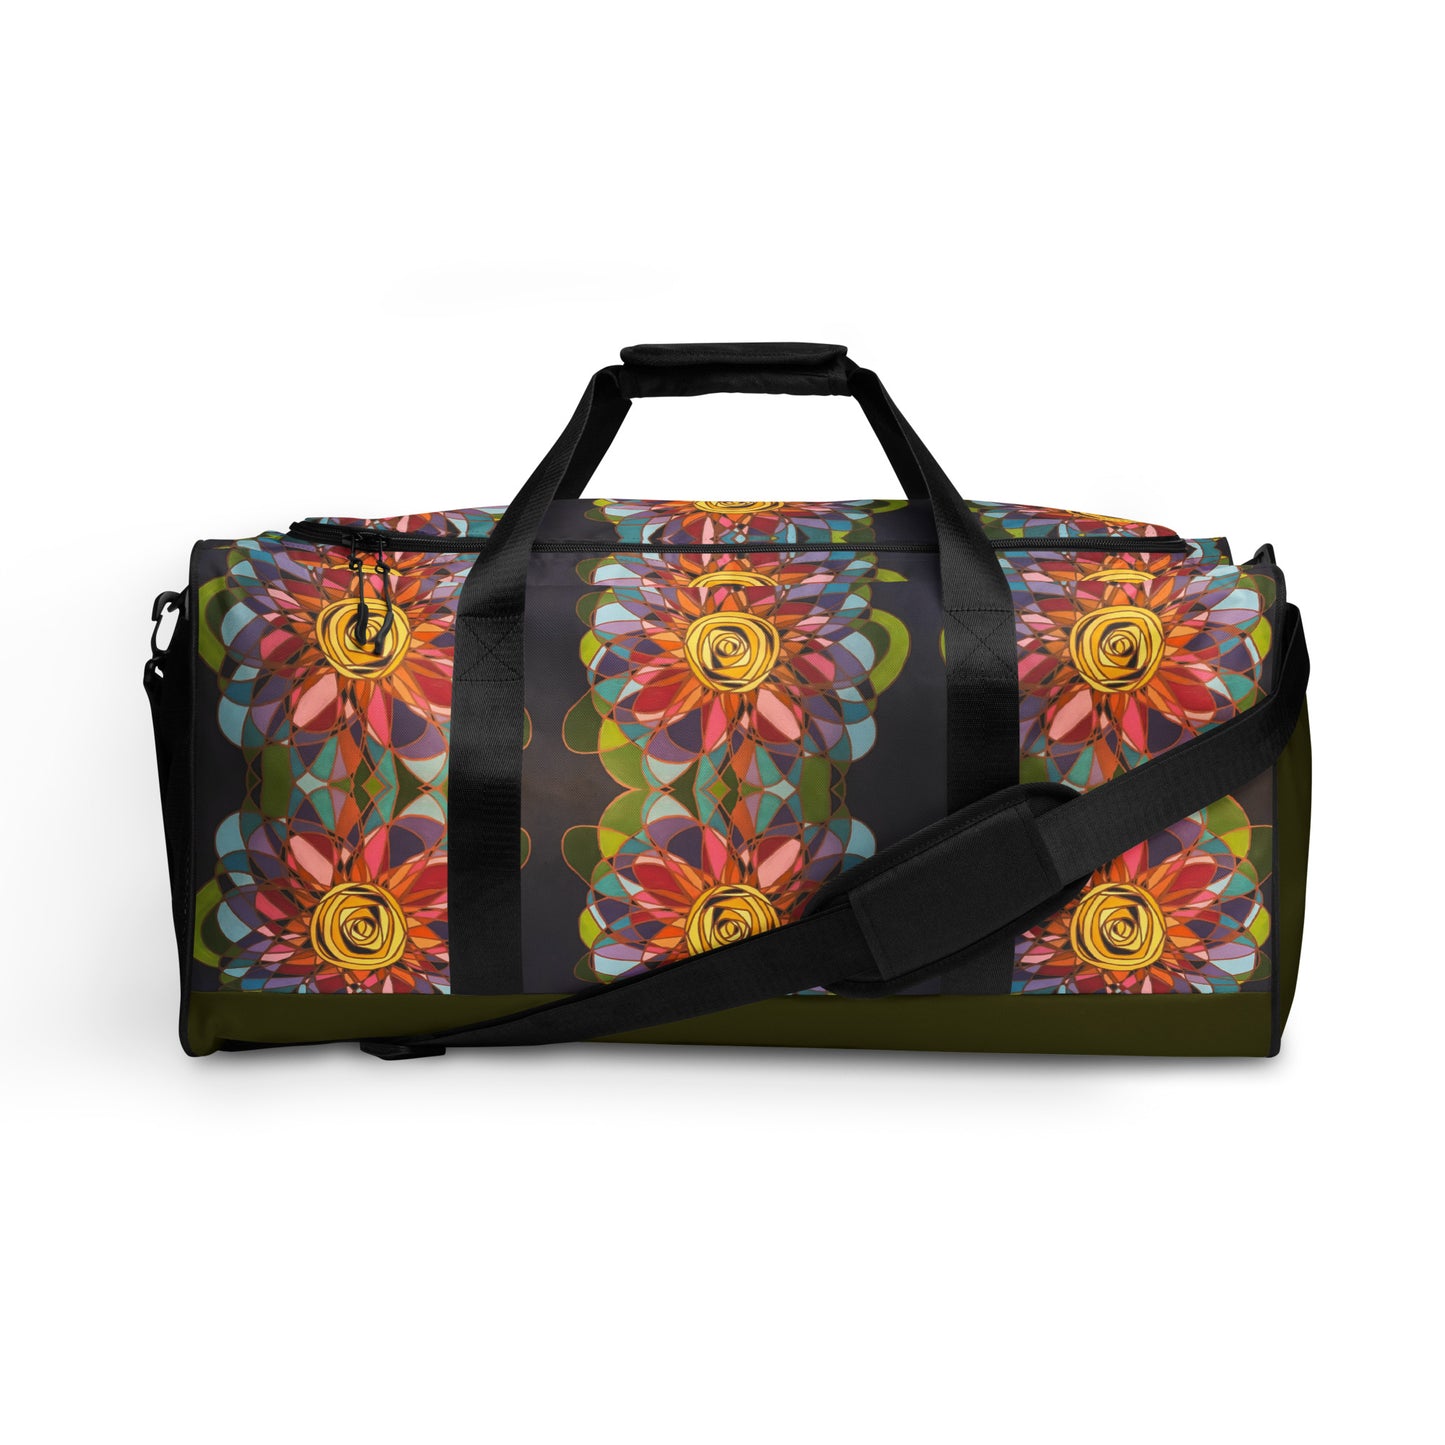 Swirl Flowers in Rainbow Duffle bag